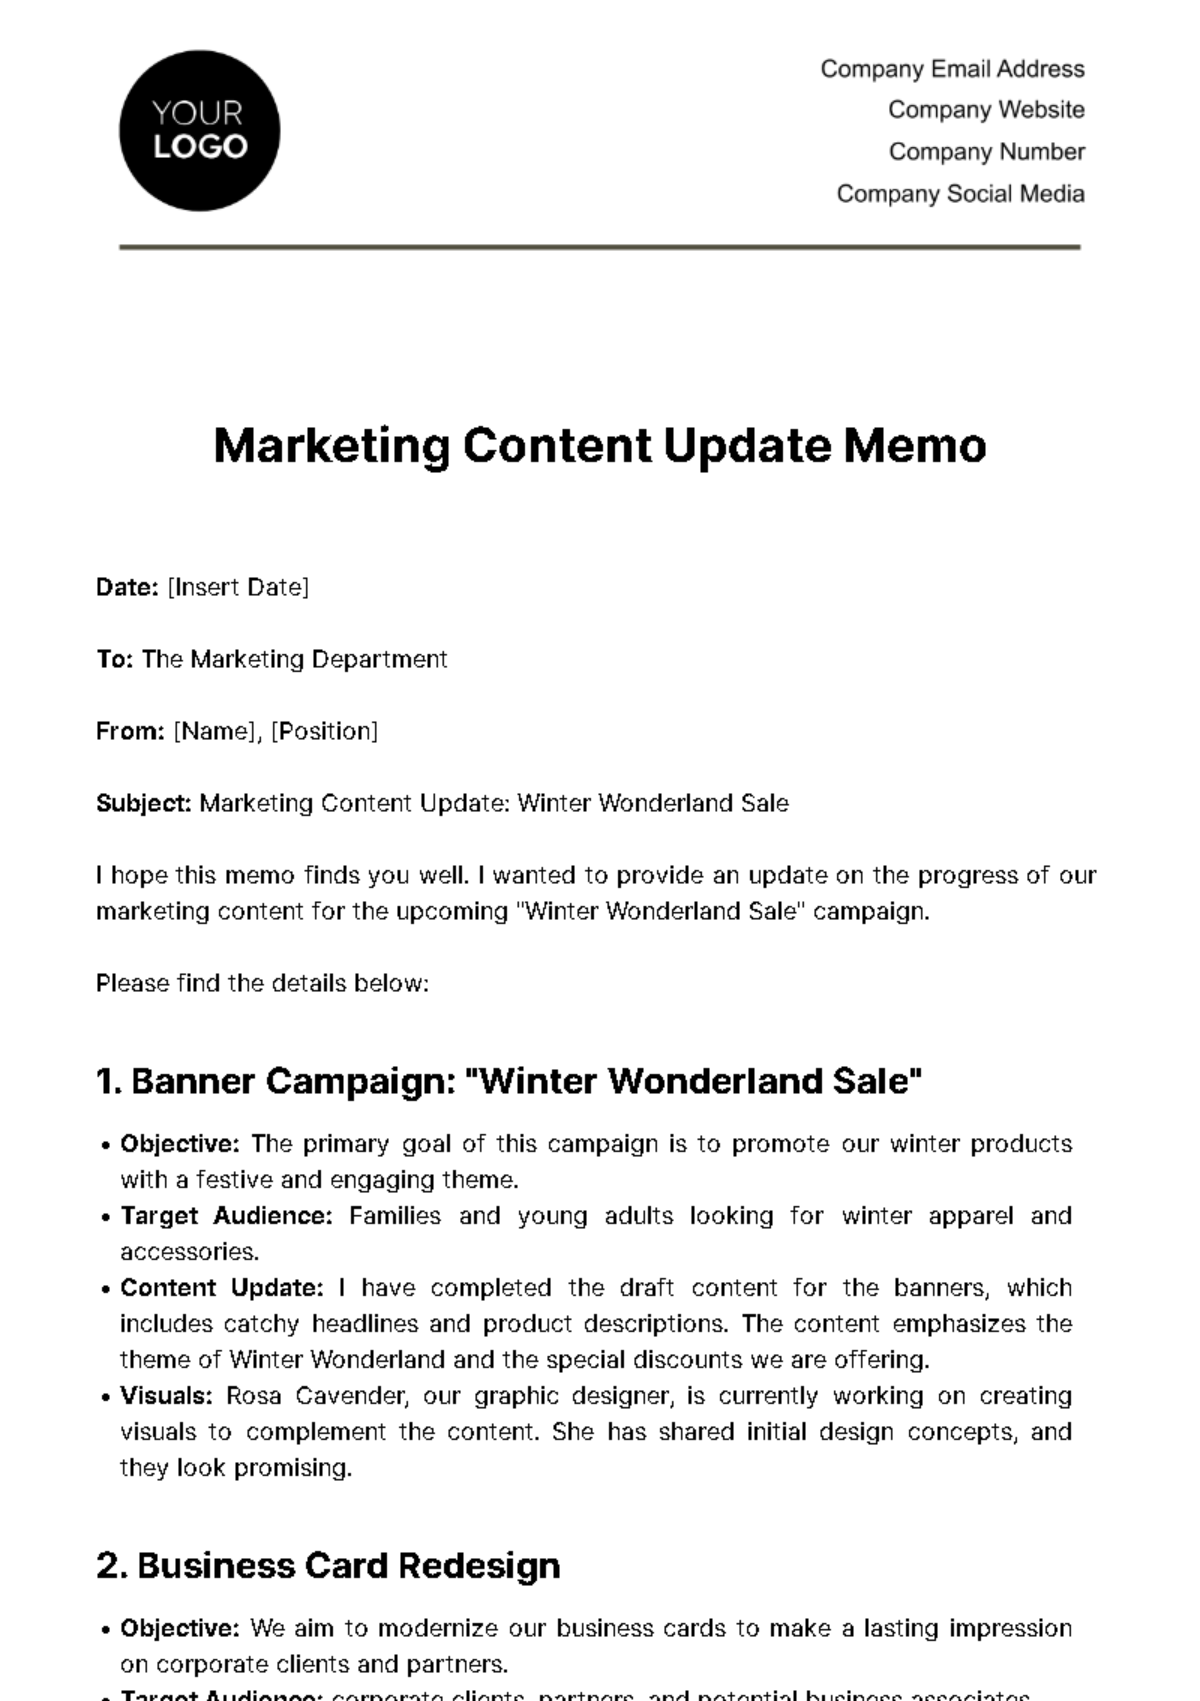 Marketing Content Update Memo Template